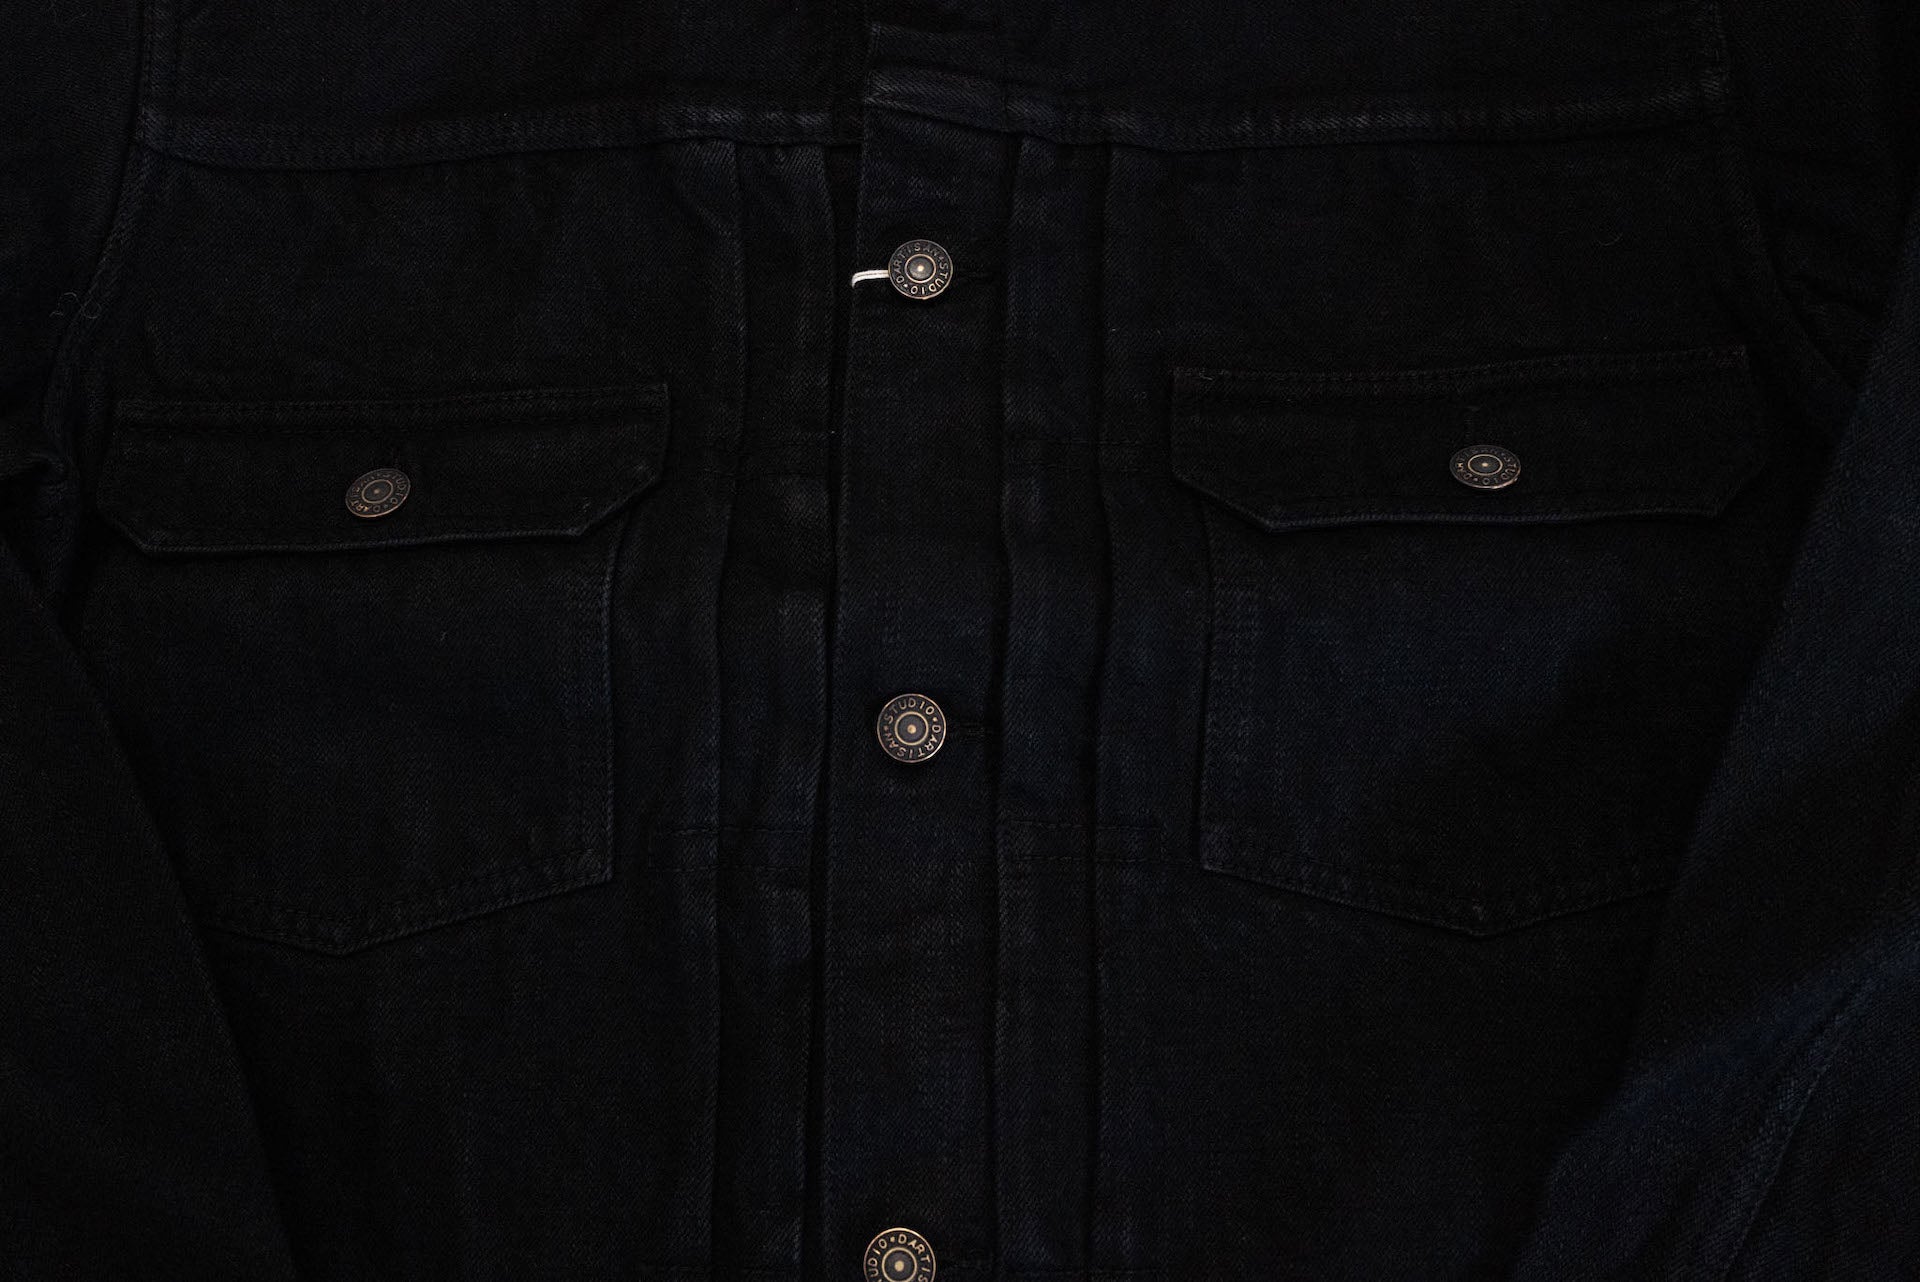 Studio D'Artisan 14oz "Kurozome" Ultimate-Black Type 2 Denim Jacket